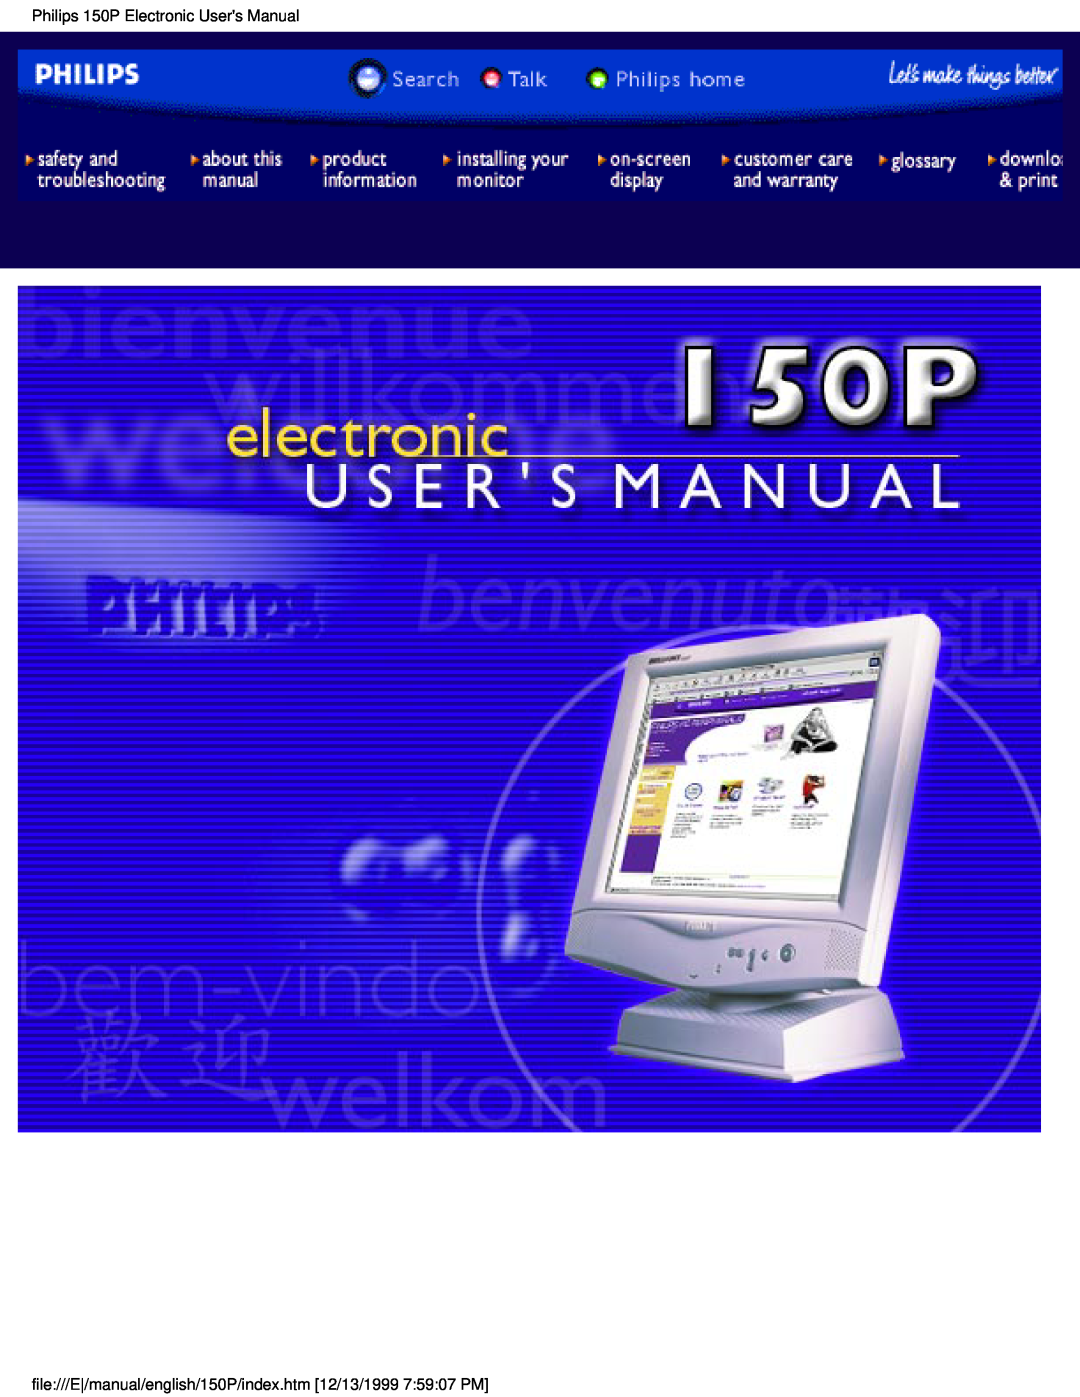 Philips user manual file///E/manual/english/150P/index.htm 12/13/1999 75907 PM 